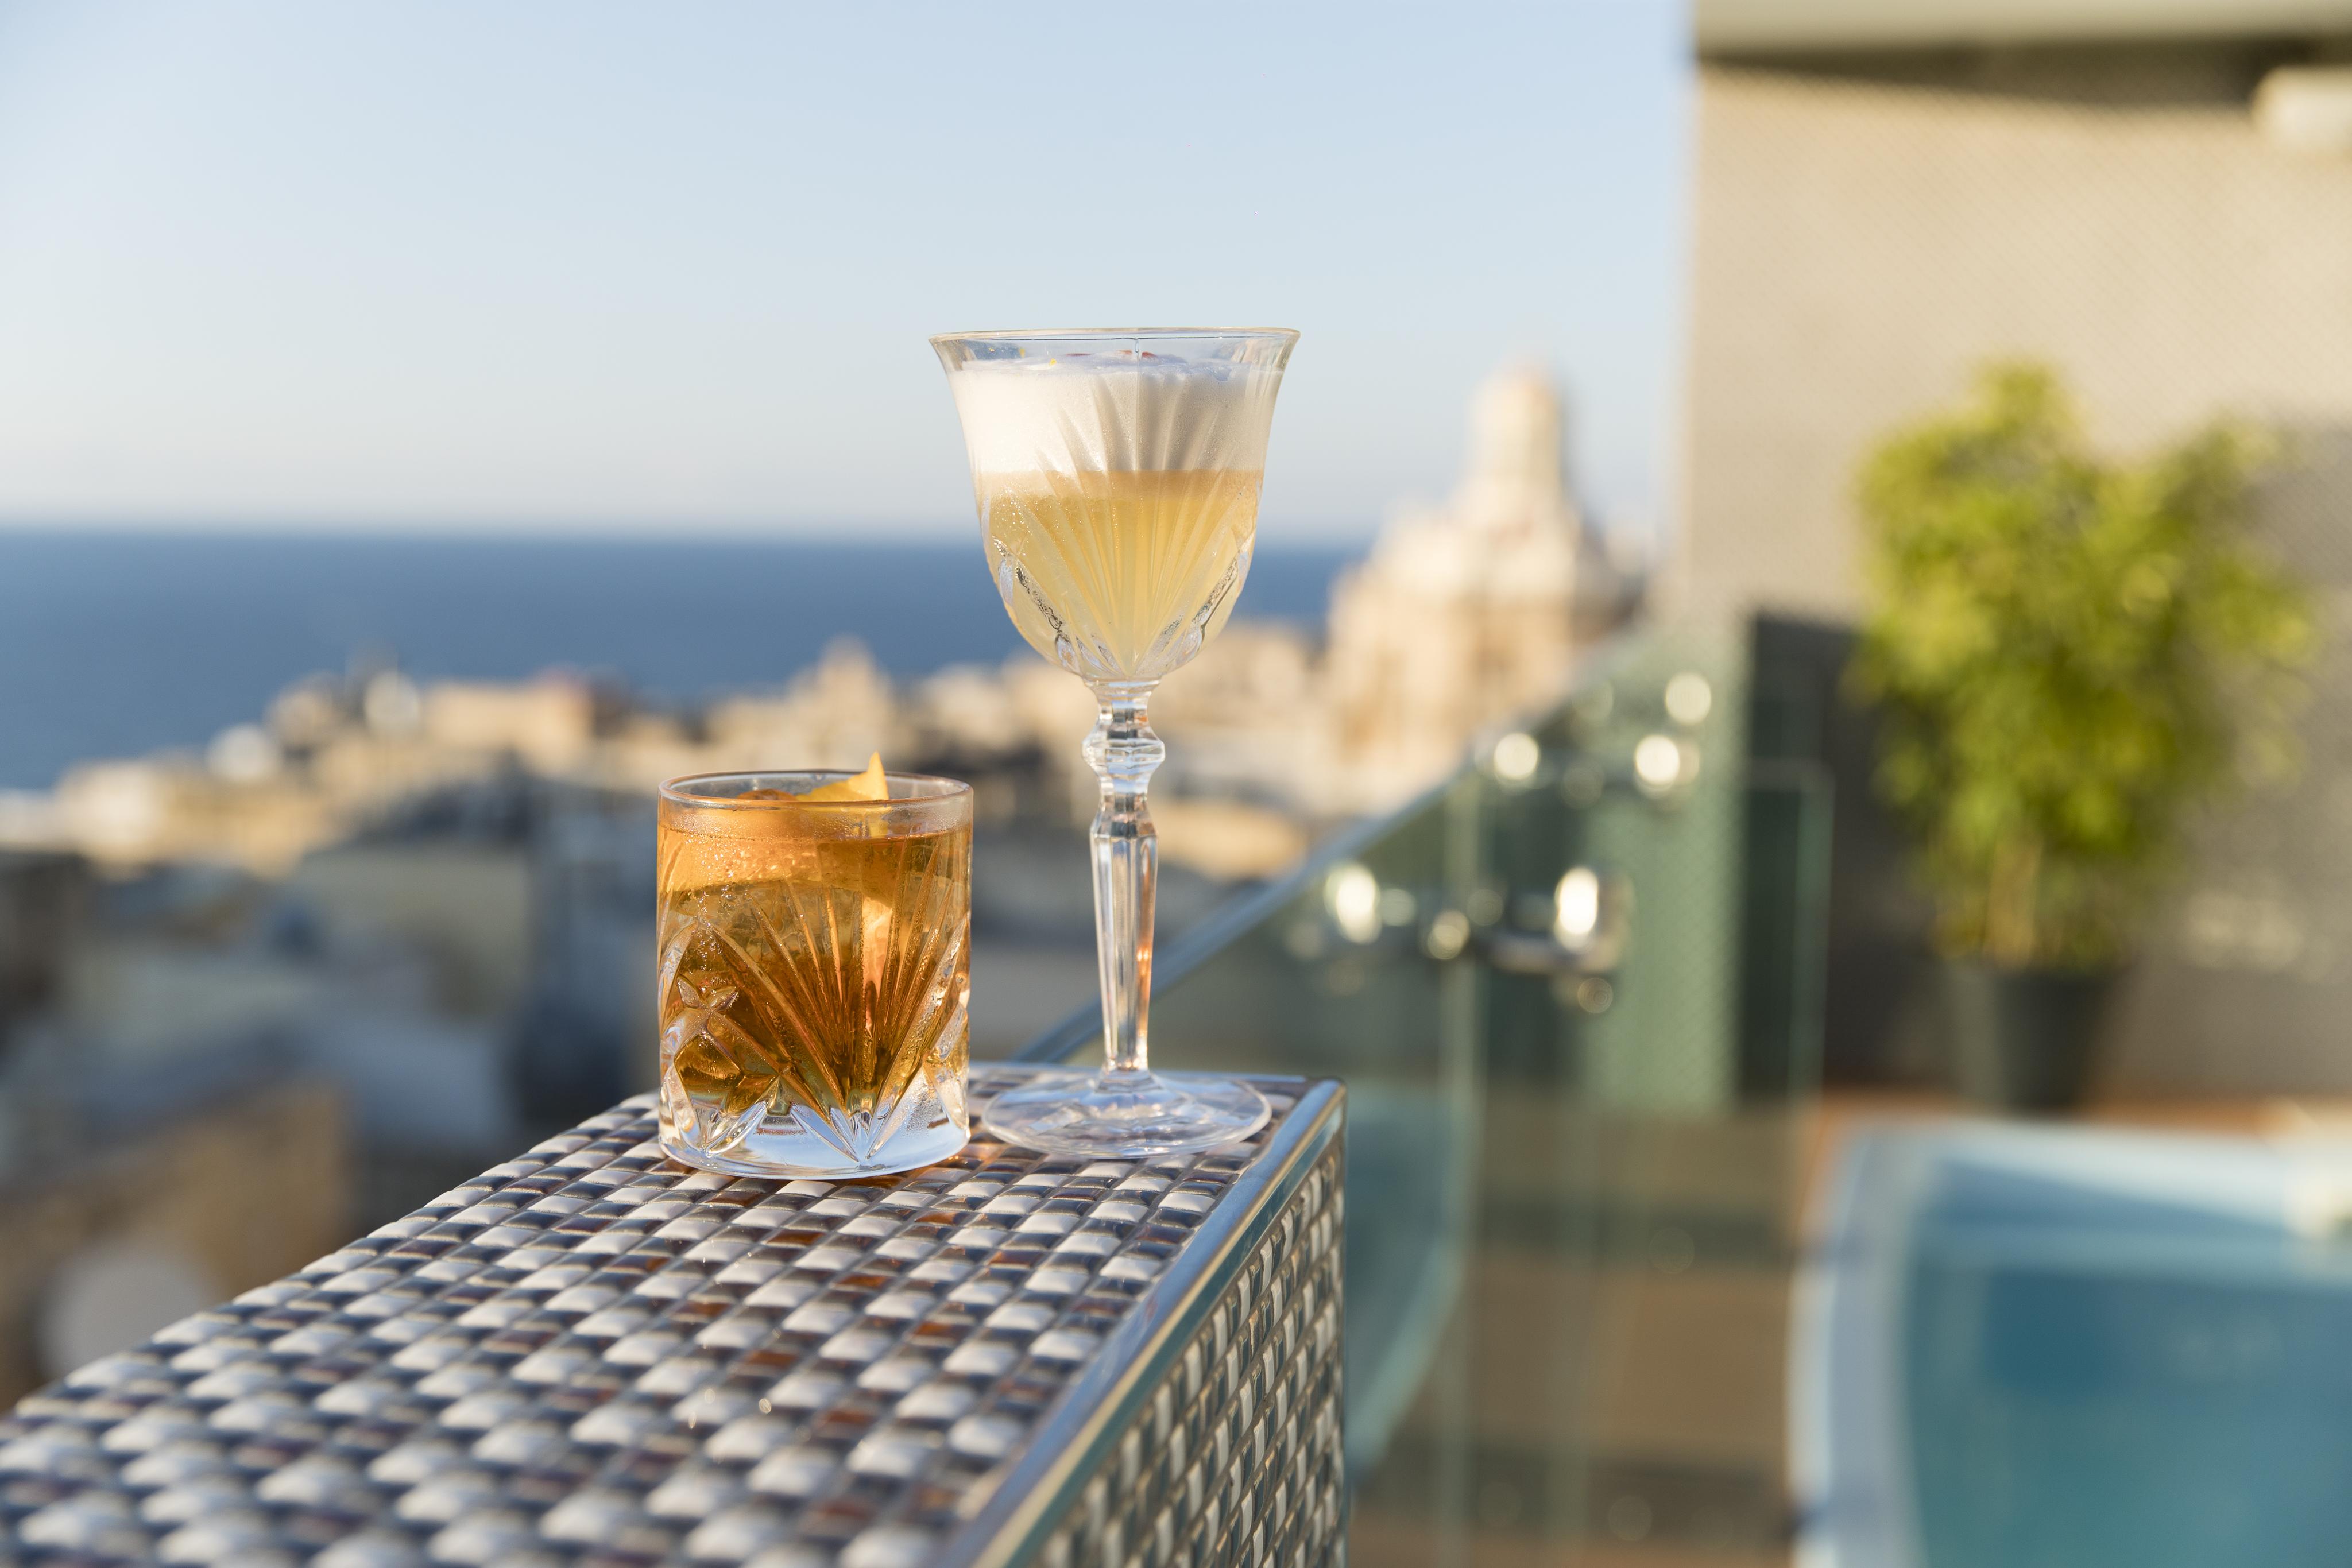 Rosselli Ax Privilege Hotel Valletta Exterior photo